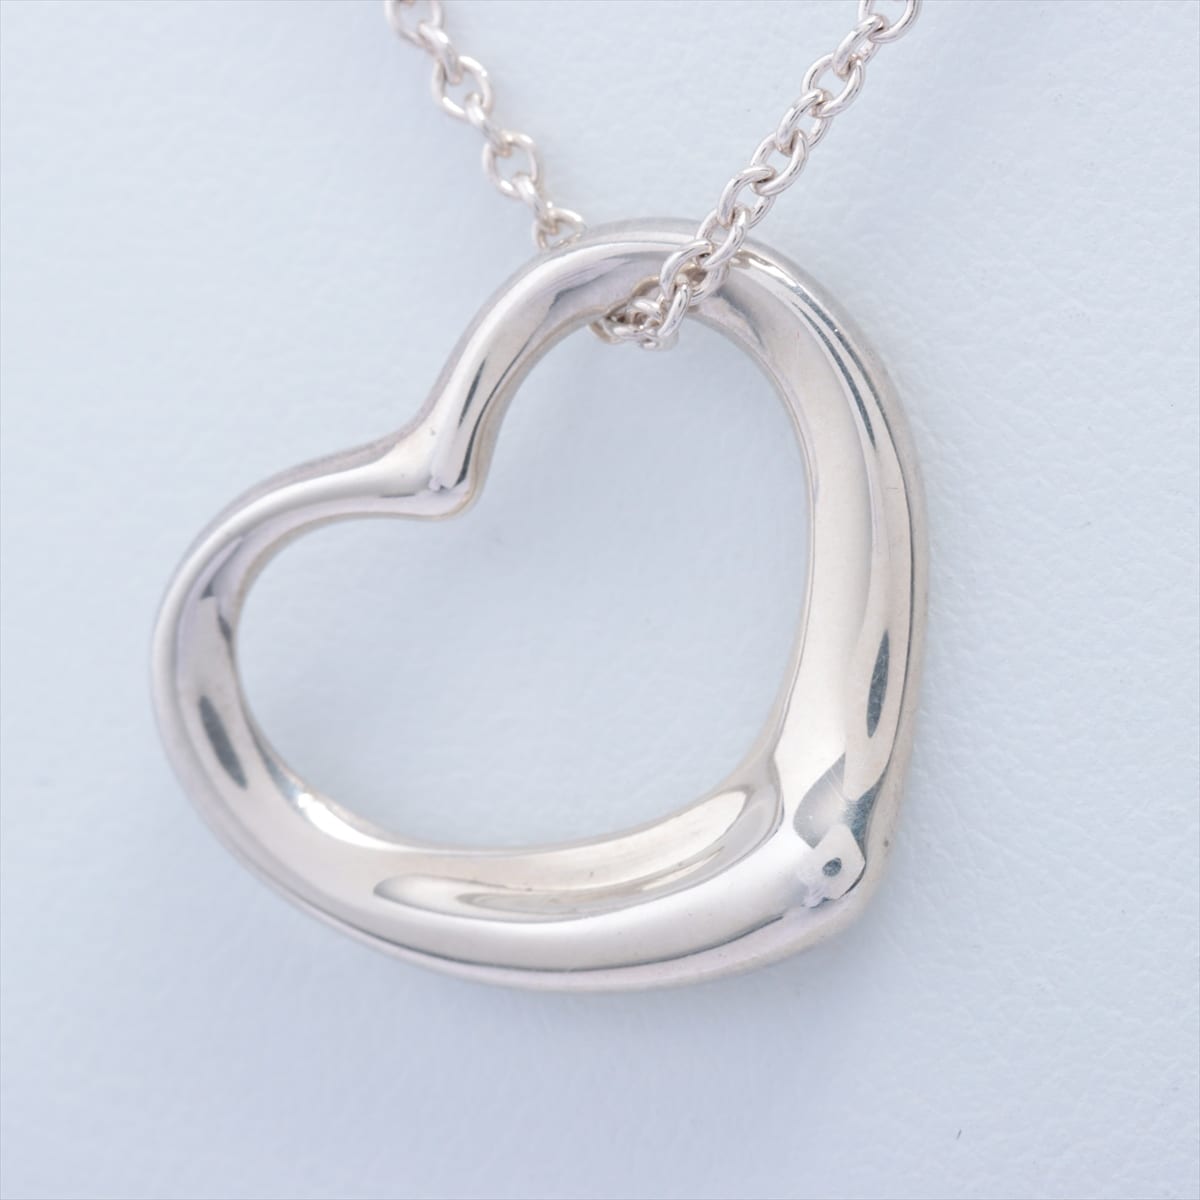 Tiffany Open Heart Necklace 925 Silver